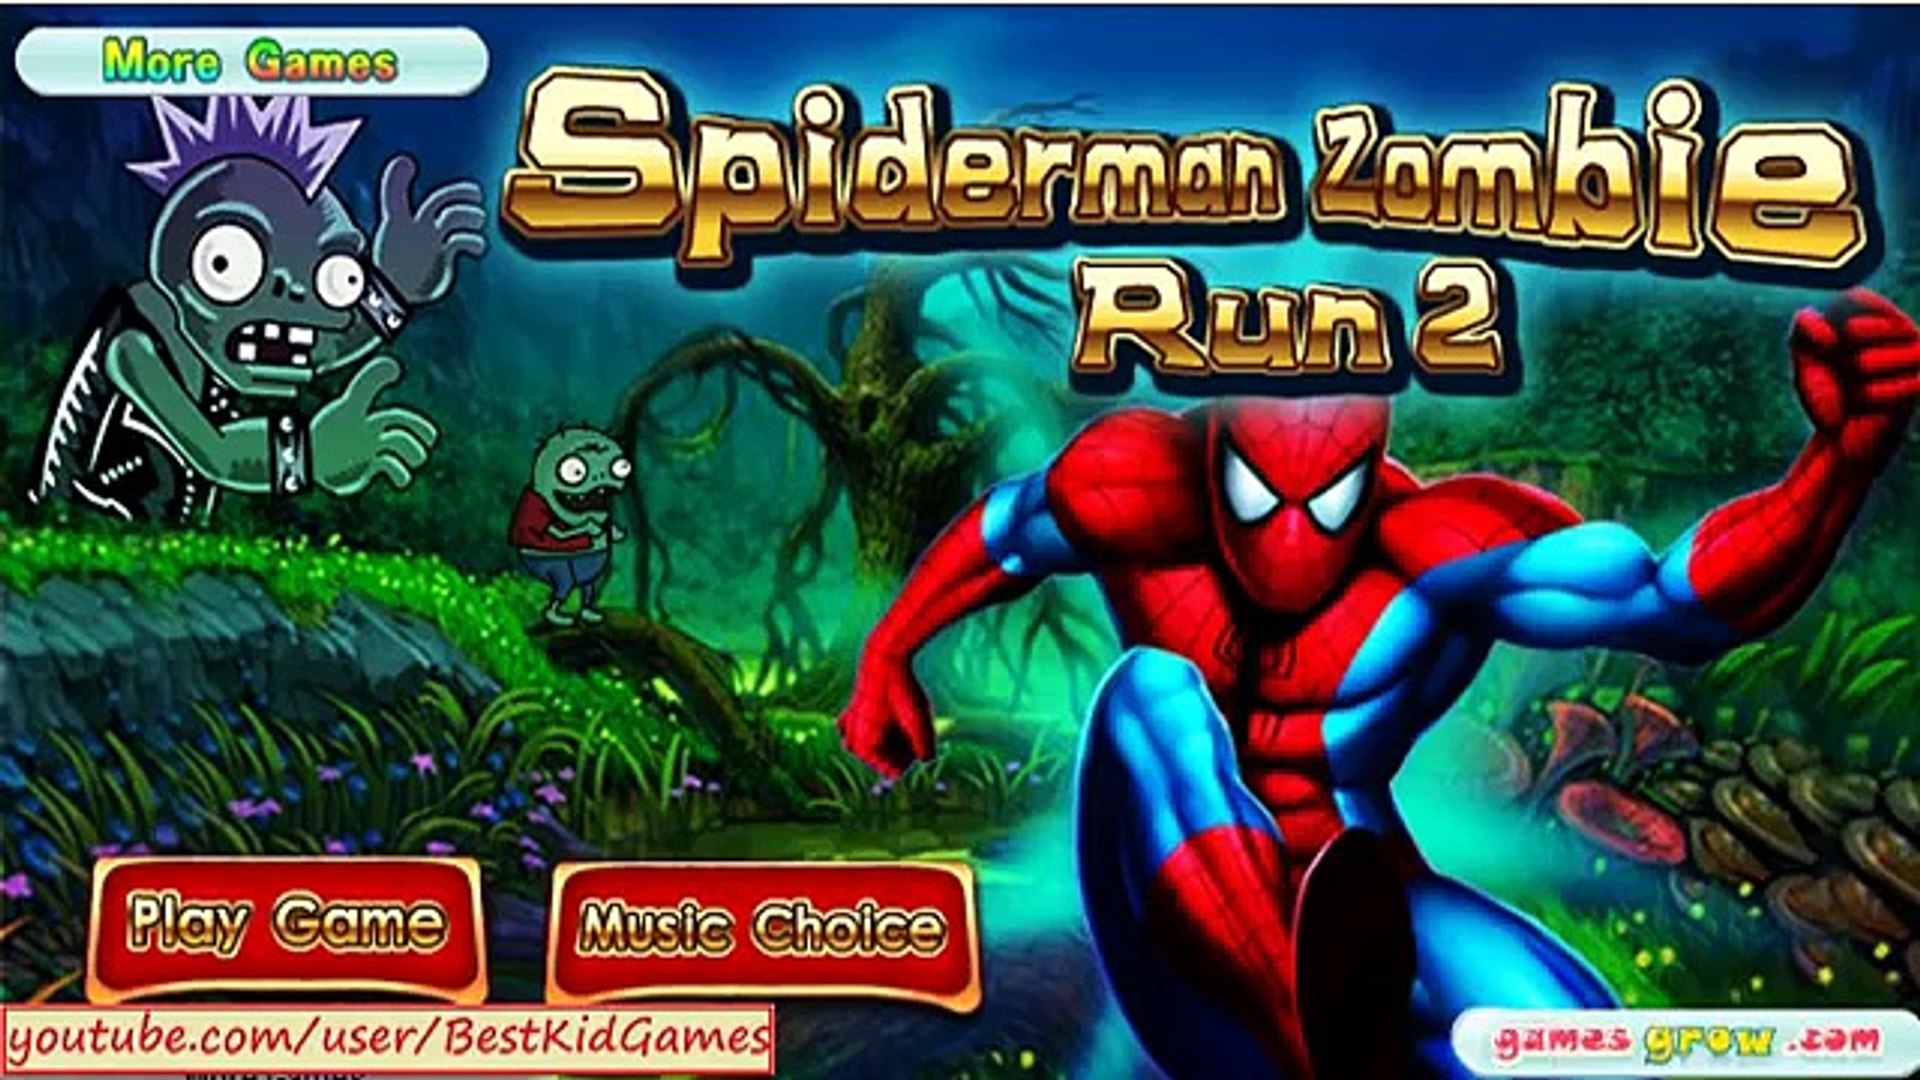 Spiderman Game - Spiderman Zombie Run game - Cartoon Game TV